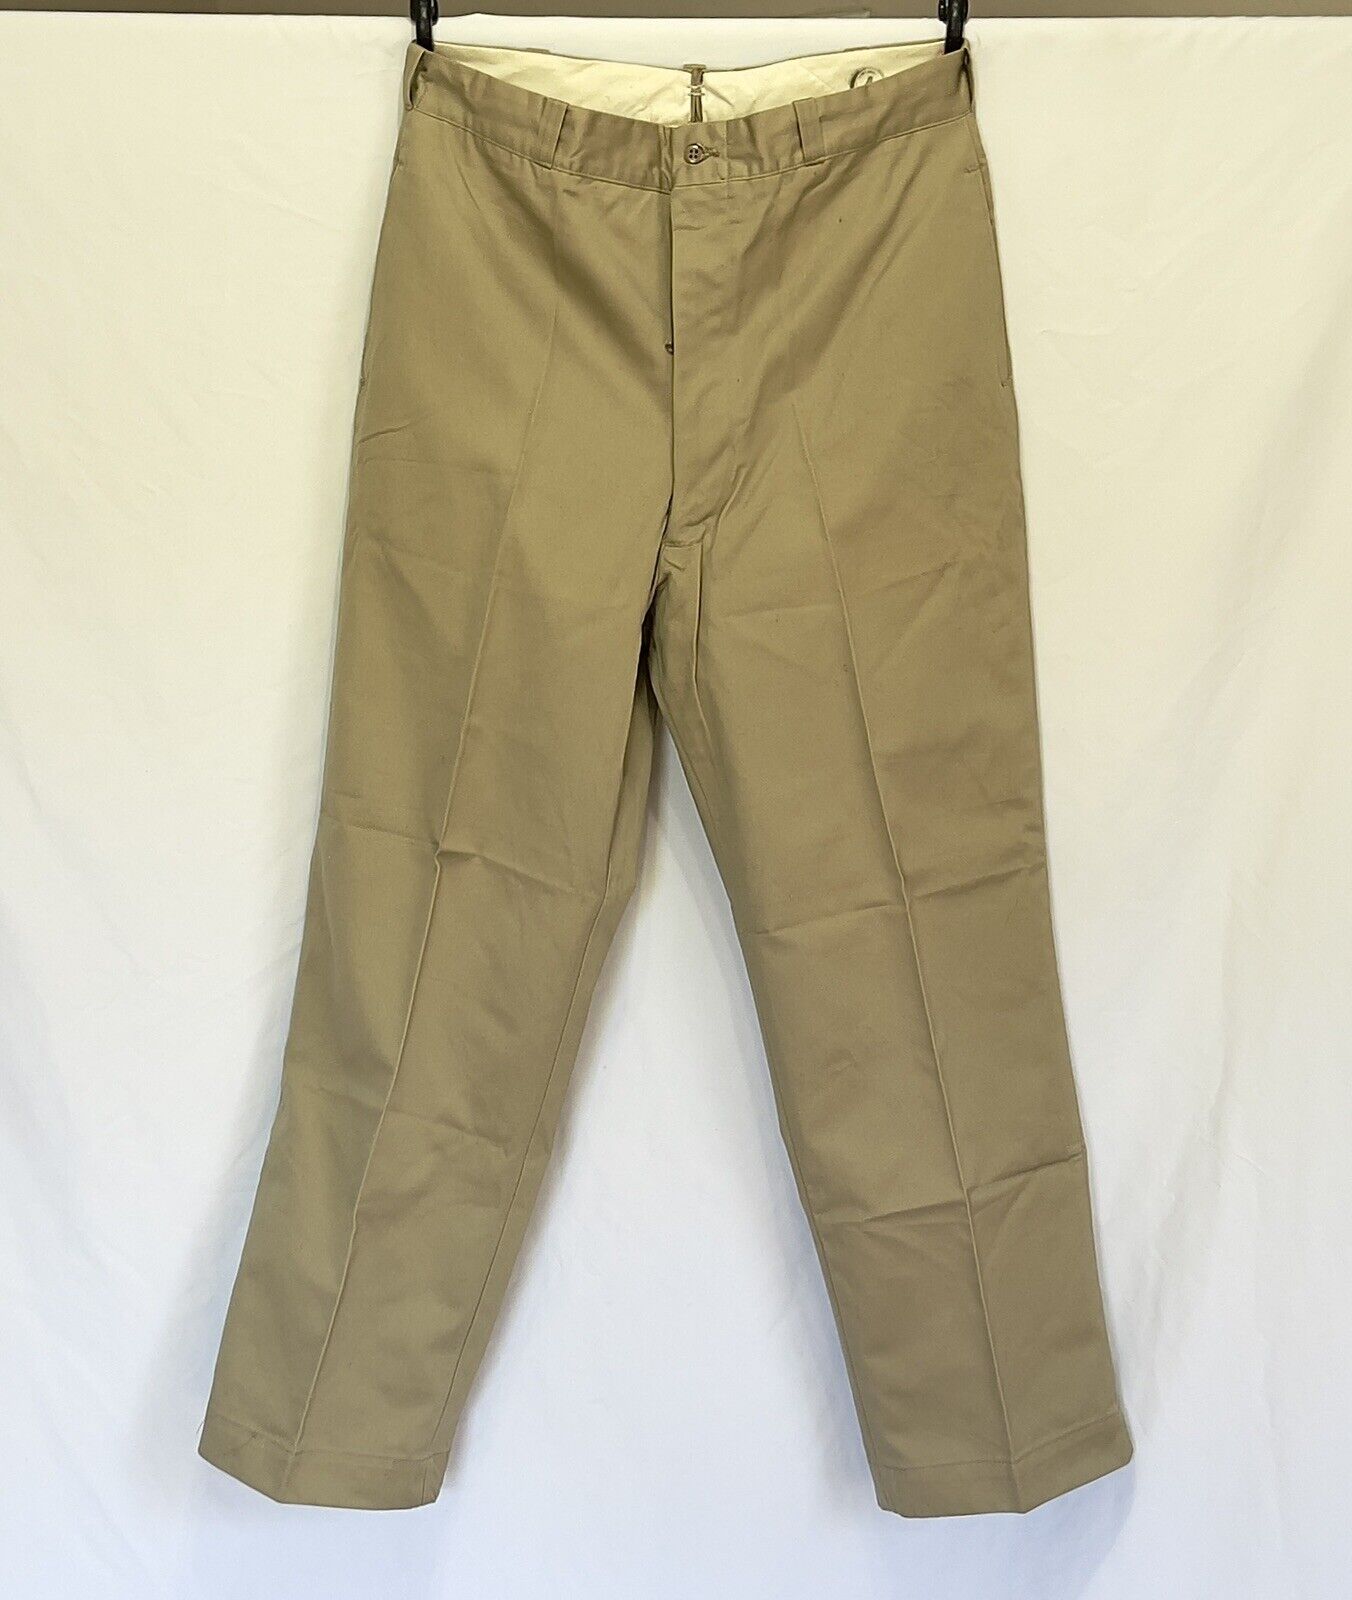 Vintage Vietnam War U.S. Army Military Khaki Slacks Pants